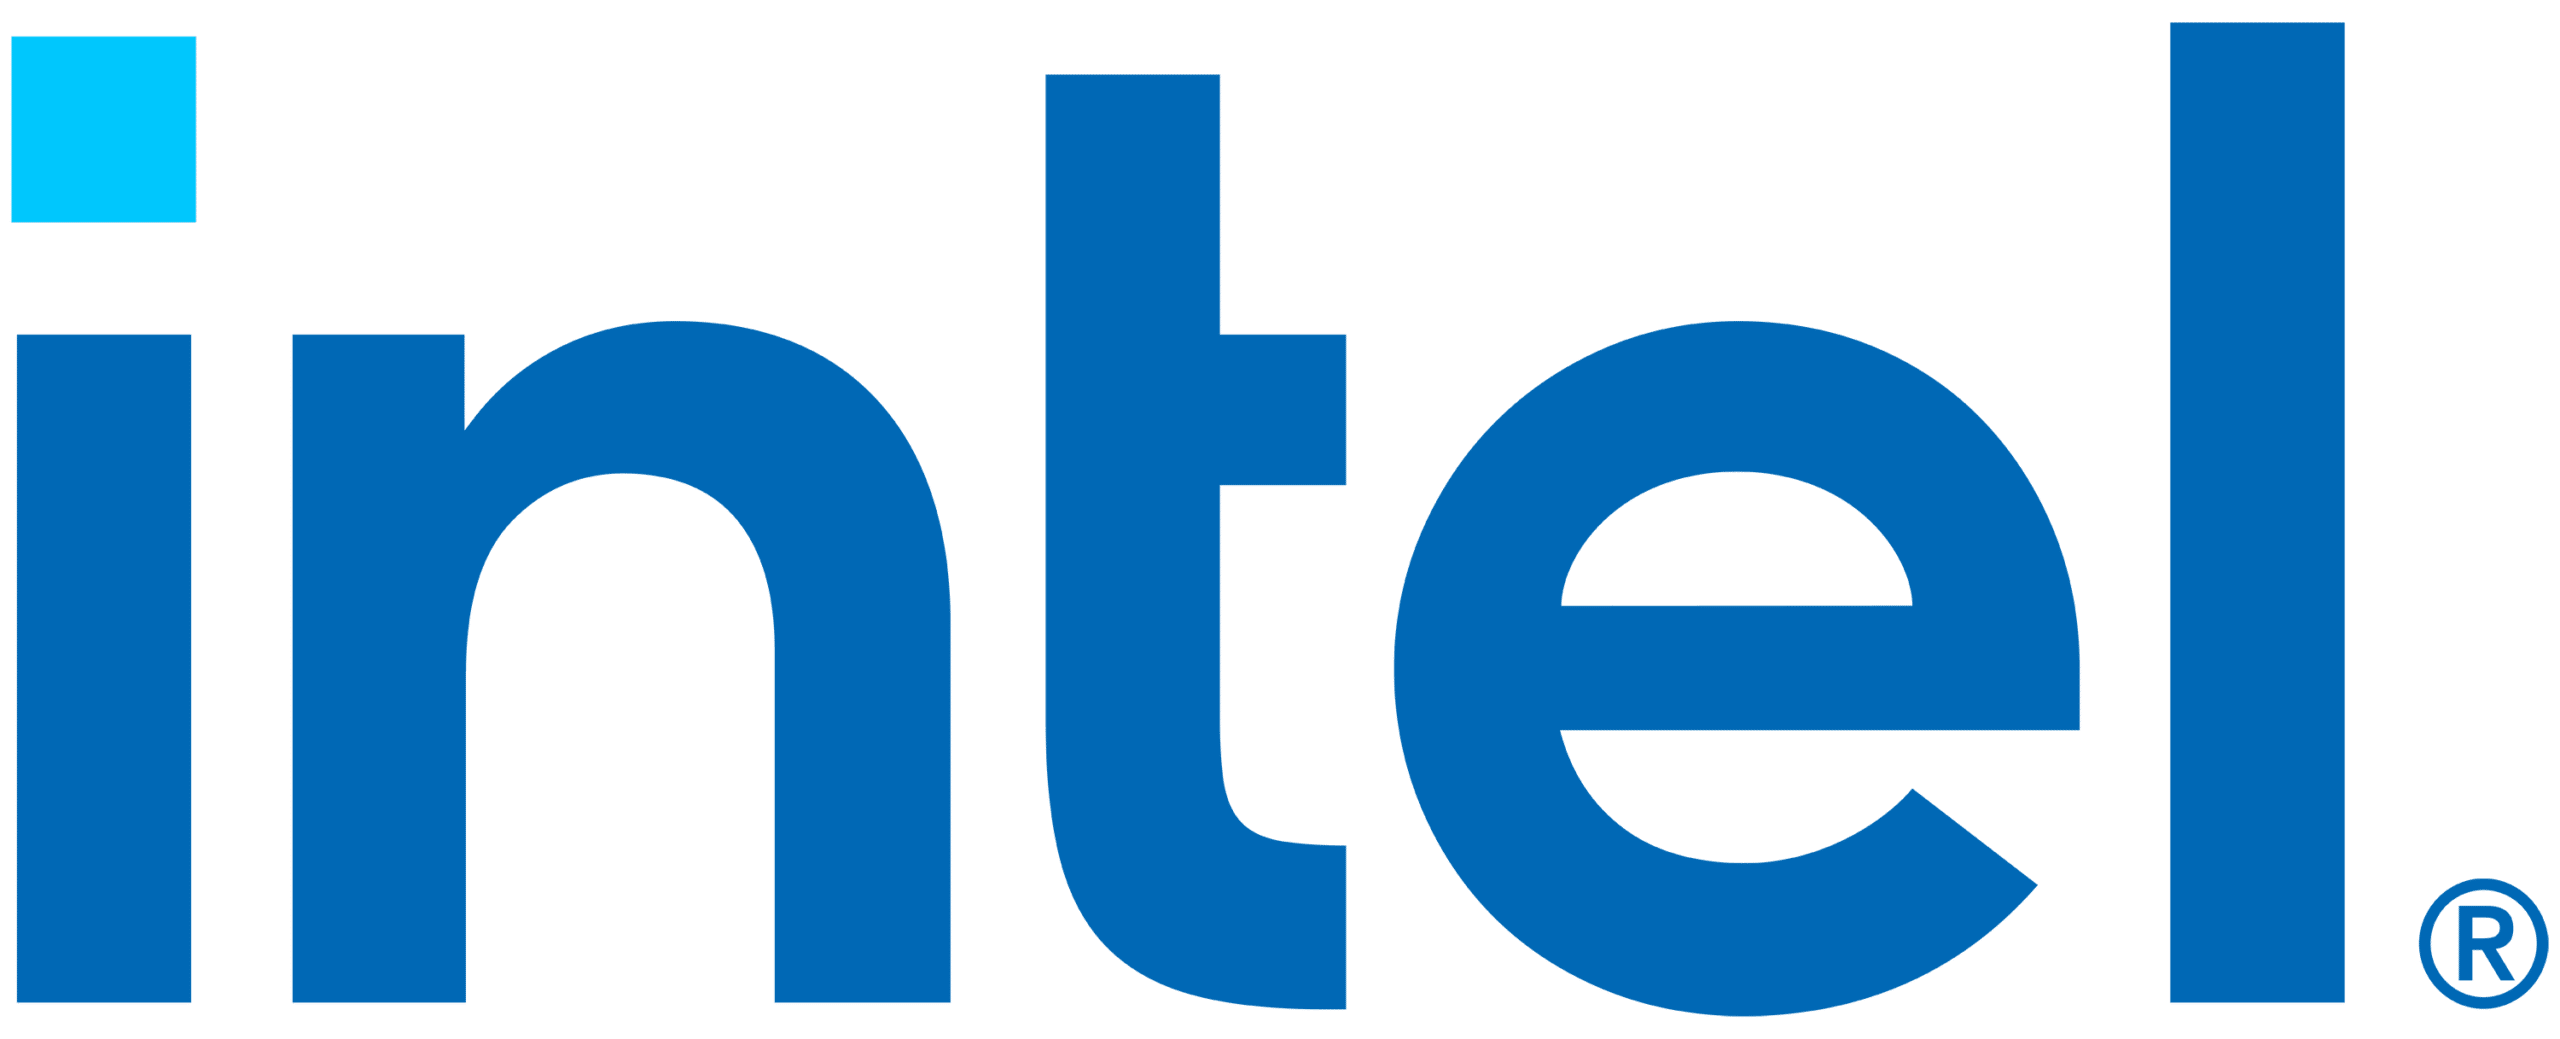 new intel logo